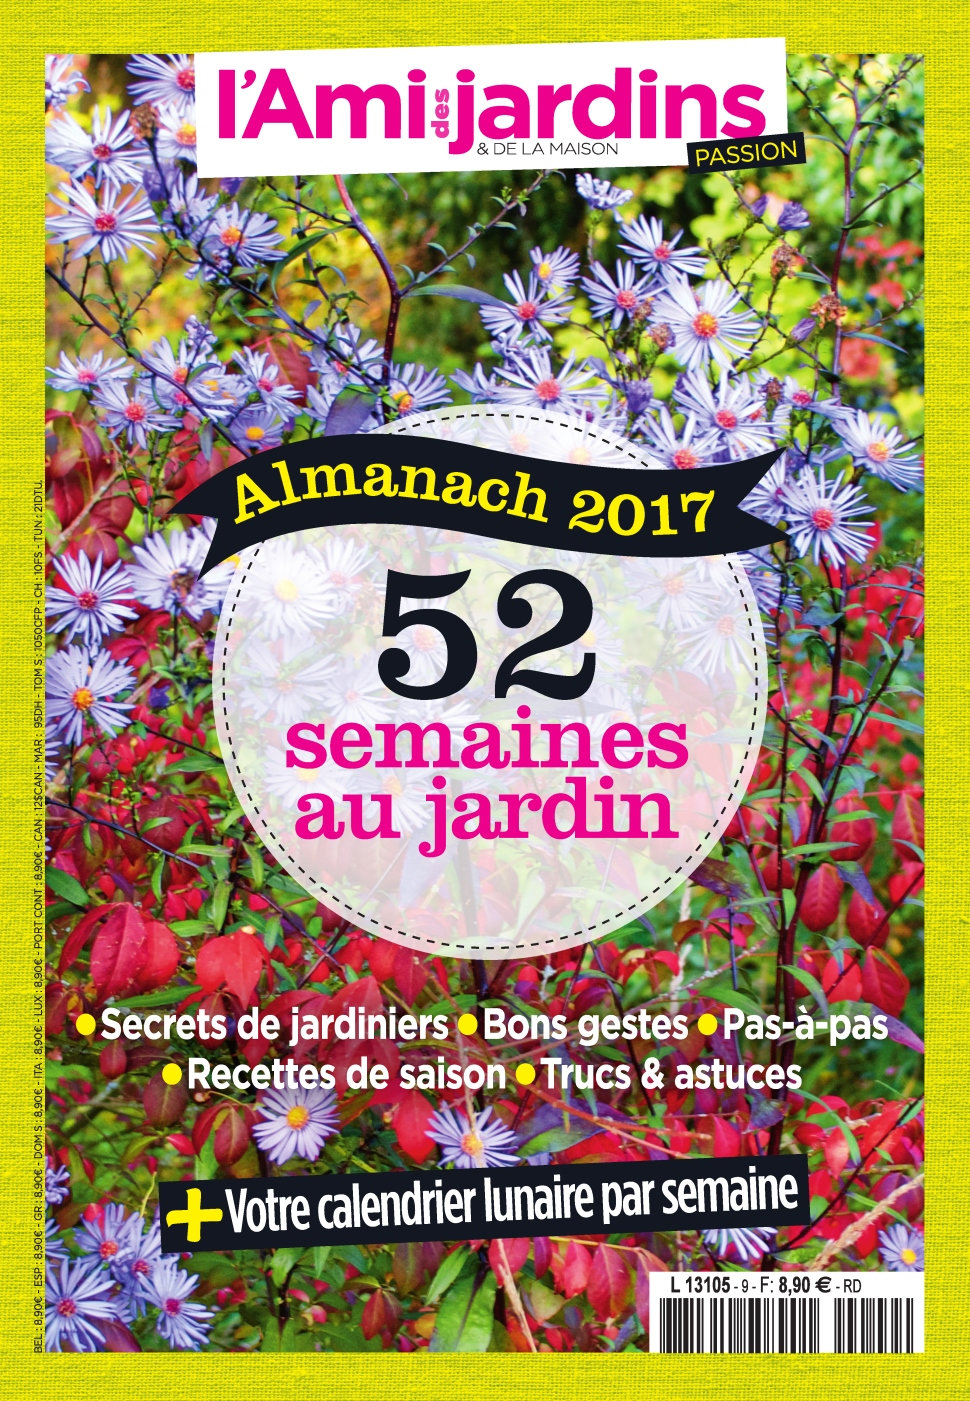 L'Ami des Jardins Passion N°9 - Almanach 2017